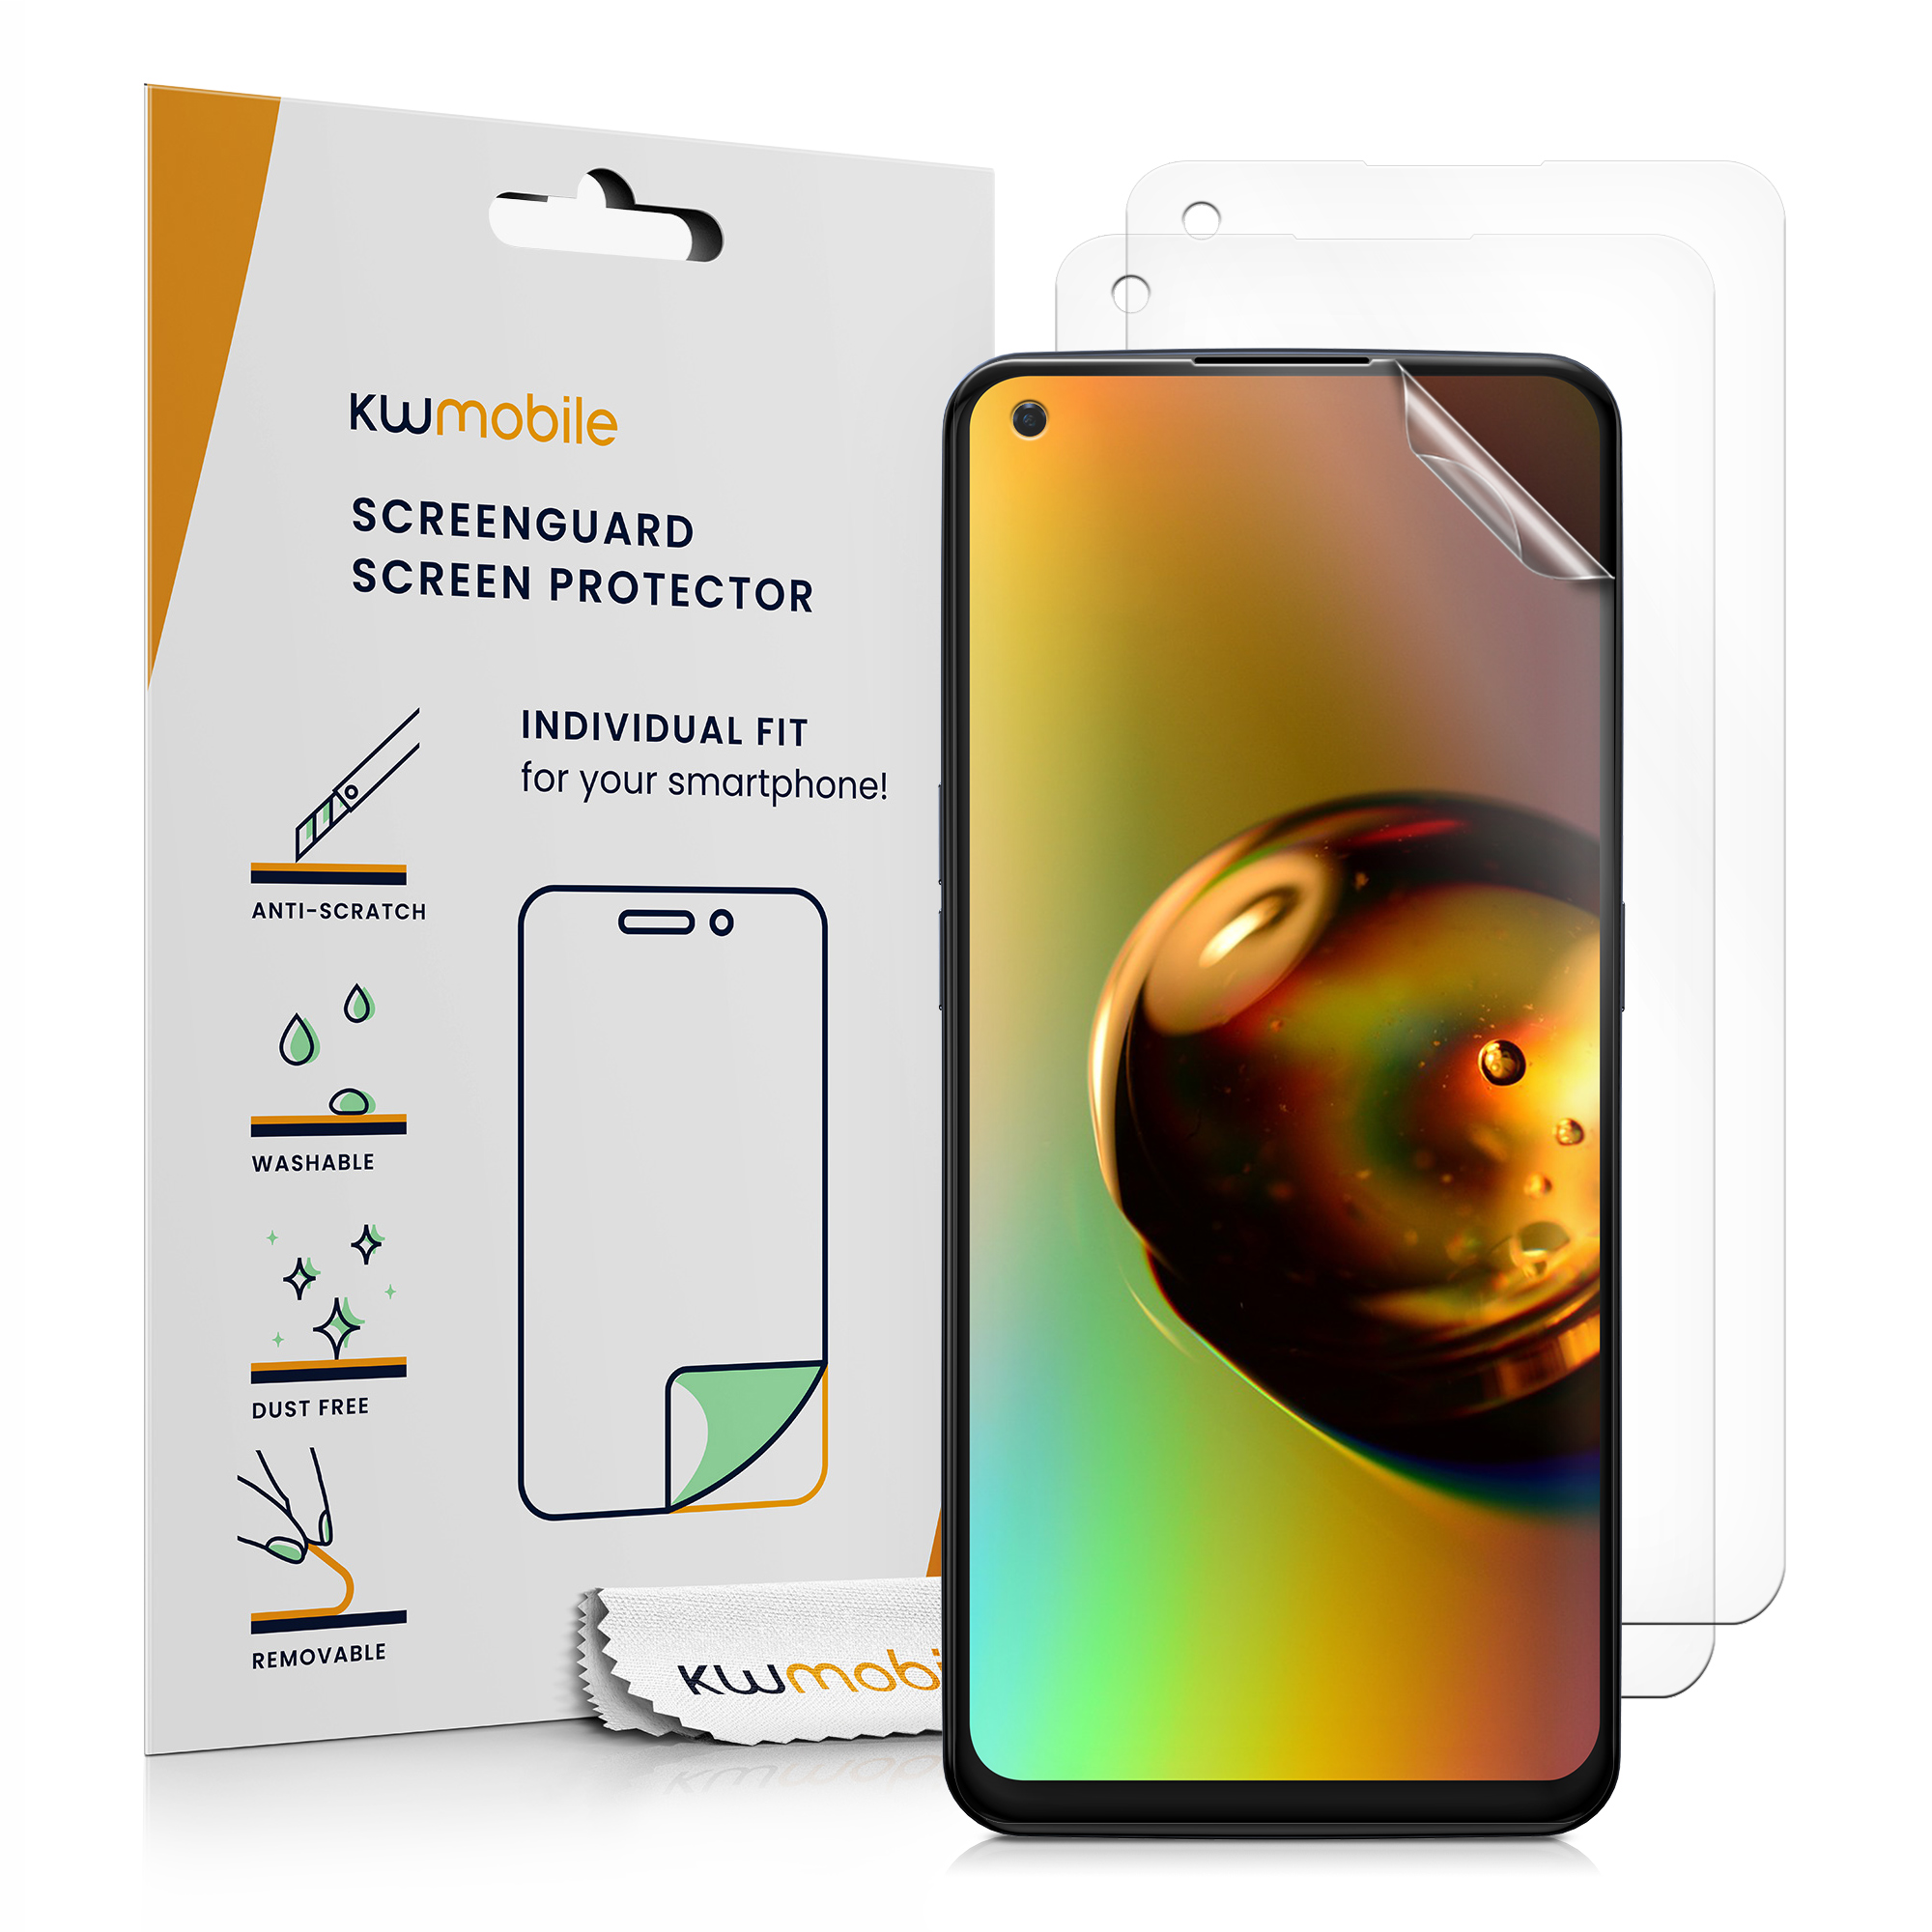 Sada 3 ochranných krytů displeje pro Oppo Find X5 Lite - Screen Protector Crystal Clear Display Film Pack pro telefon